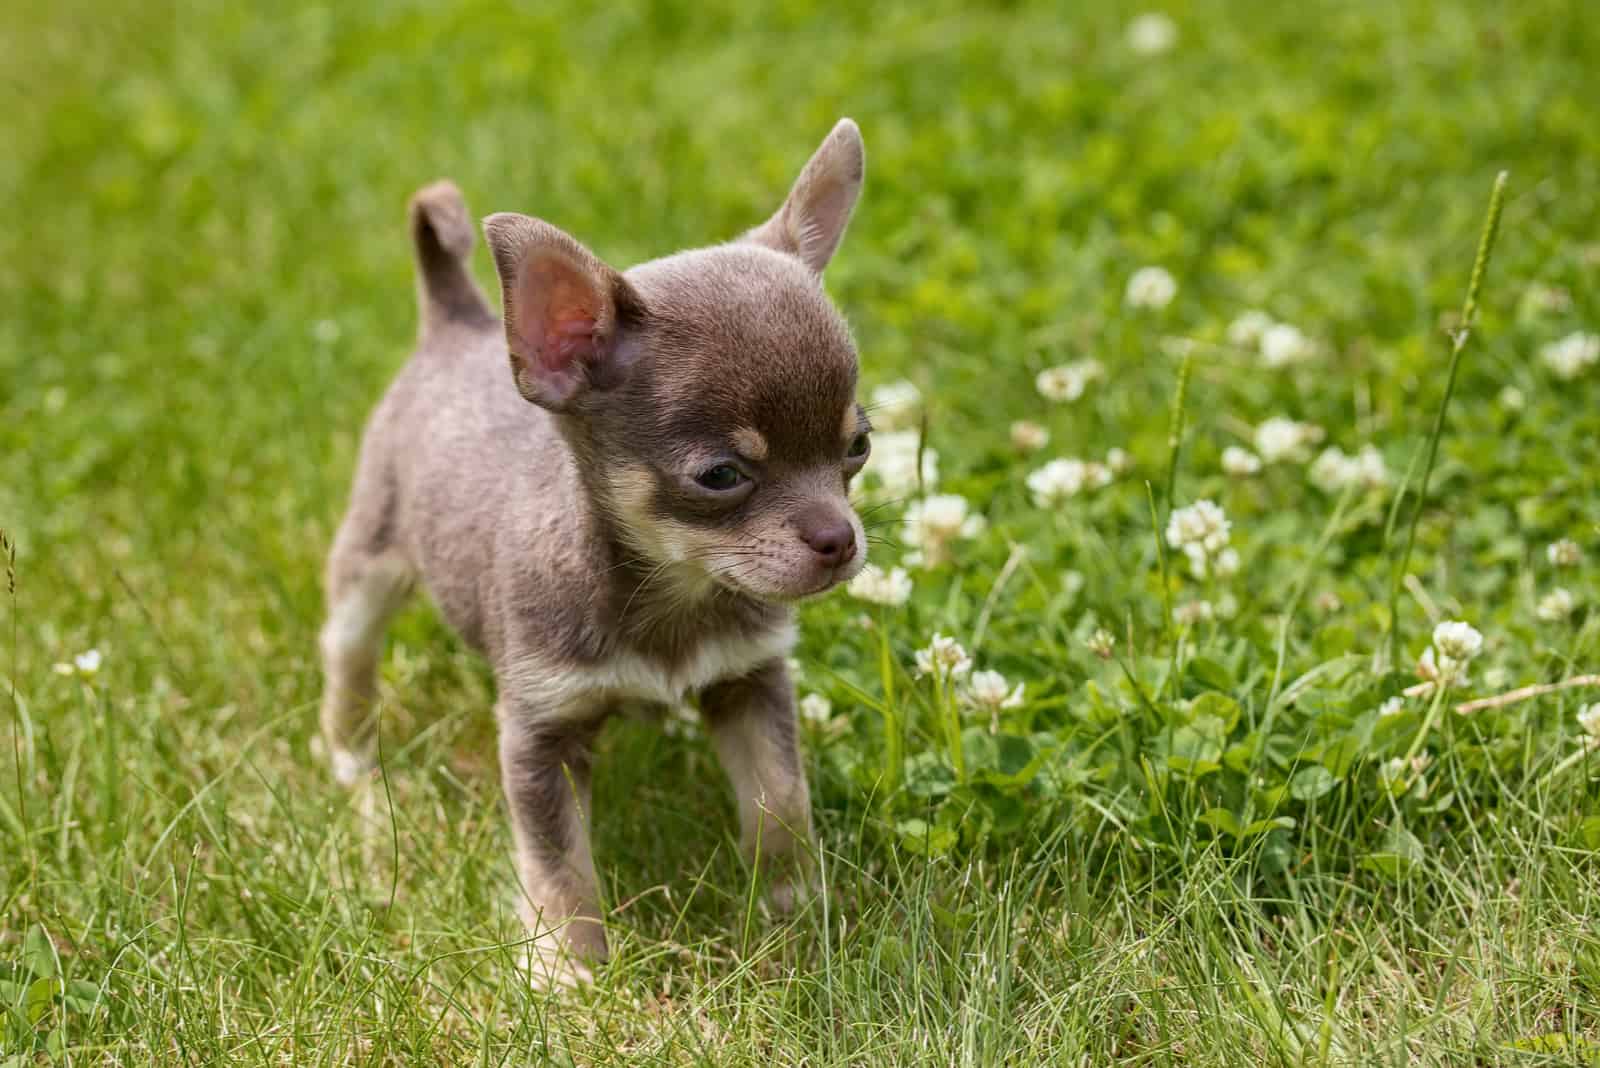 Chihuahua walking on grass outside